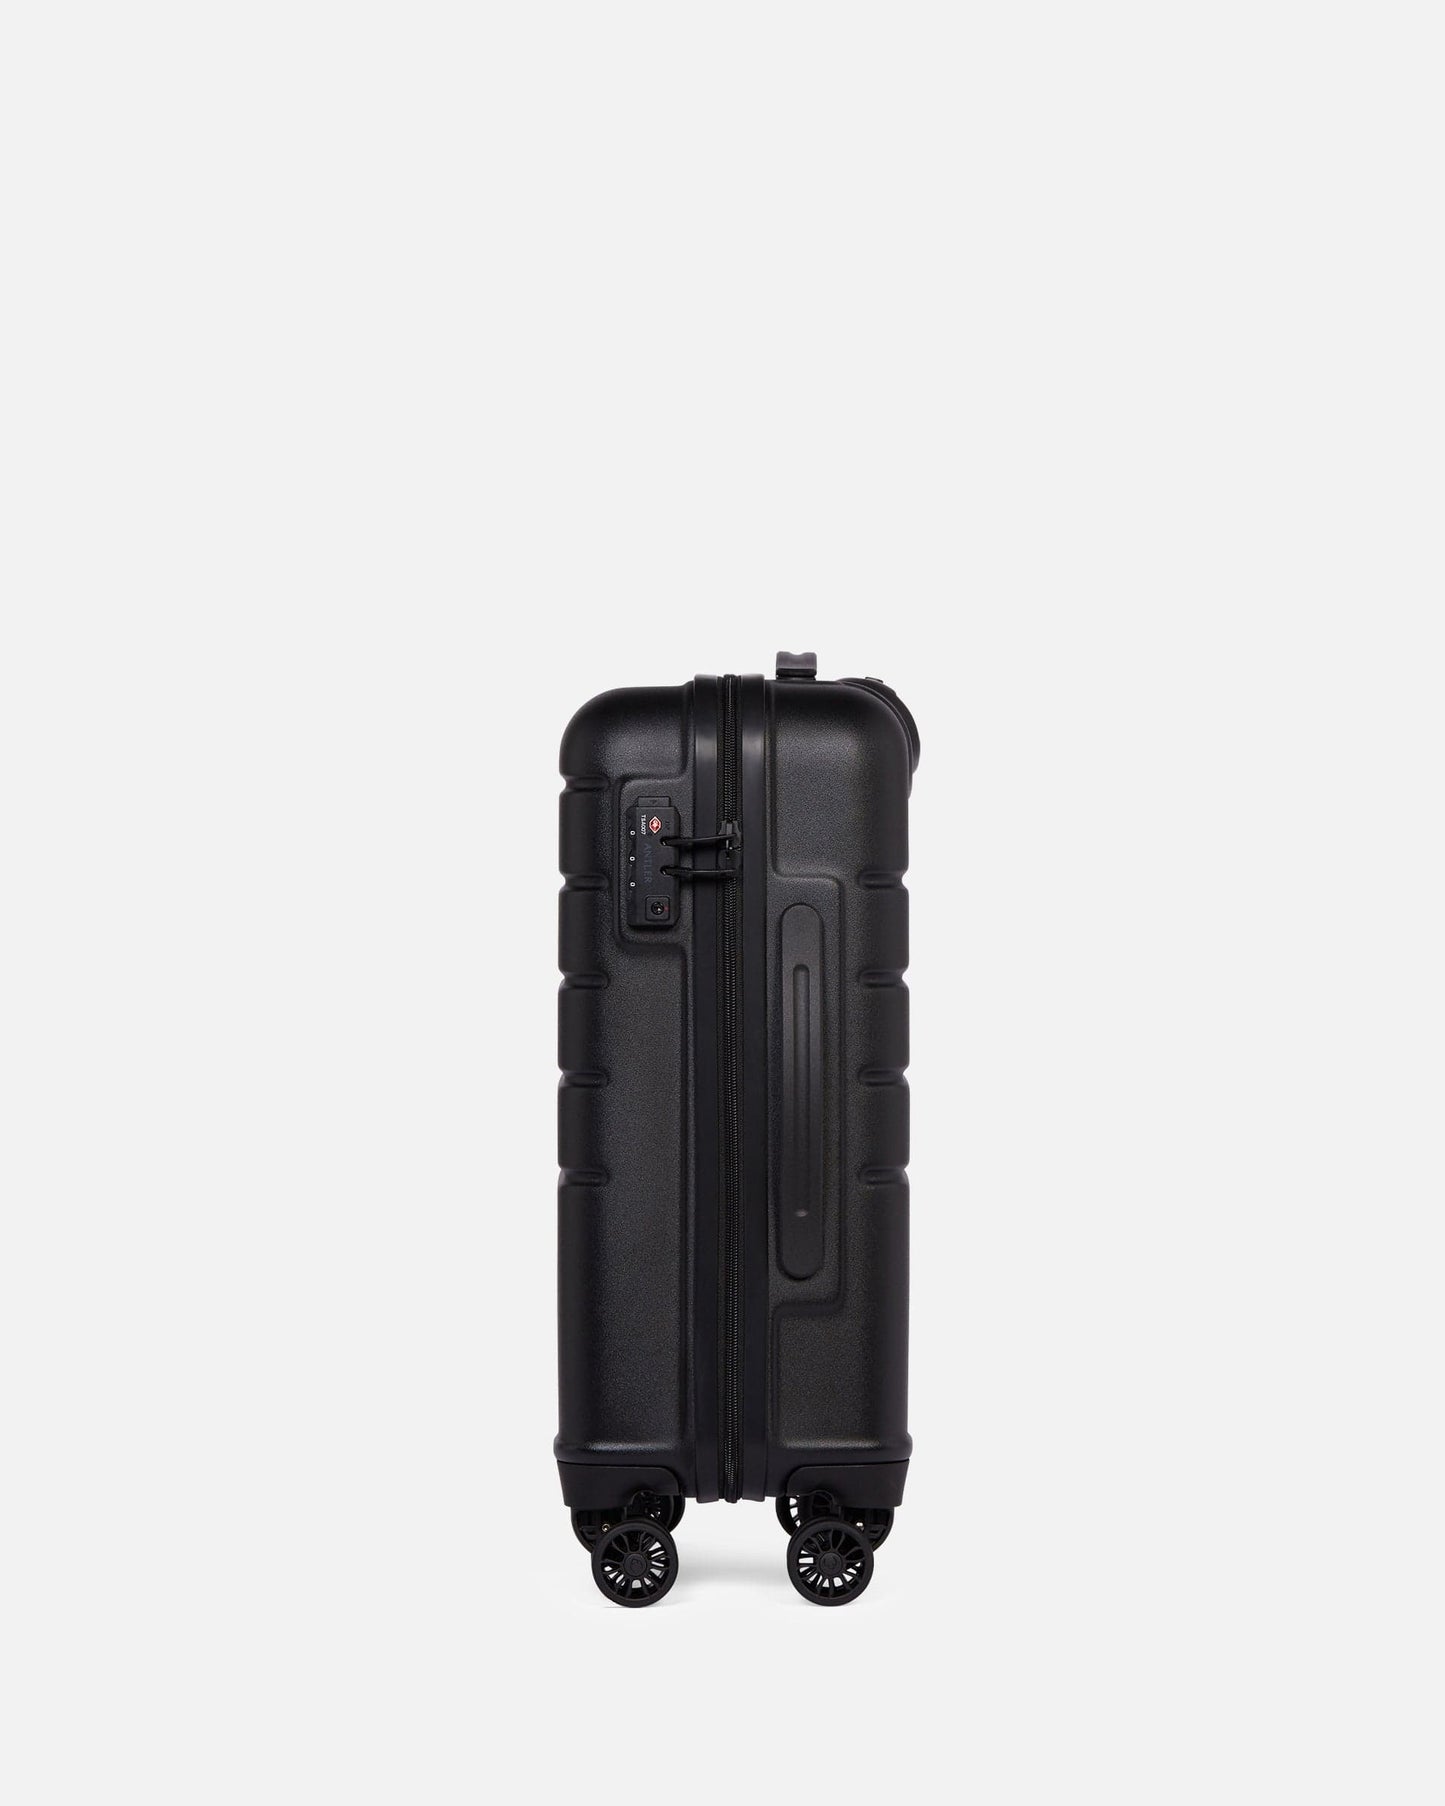 Antler UK Luggage -  Logo cabin in black - Hard Suitcases Logo Cabin Suitcase Black | Lightweight Hard Shell Luggage